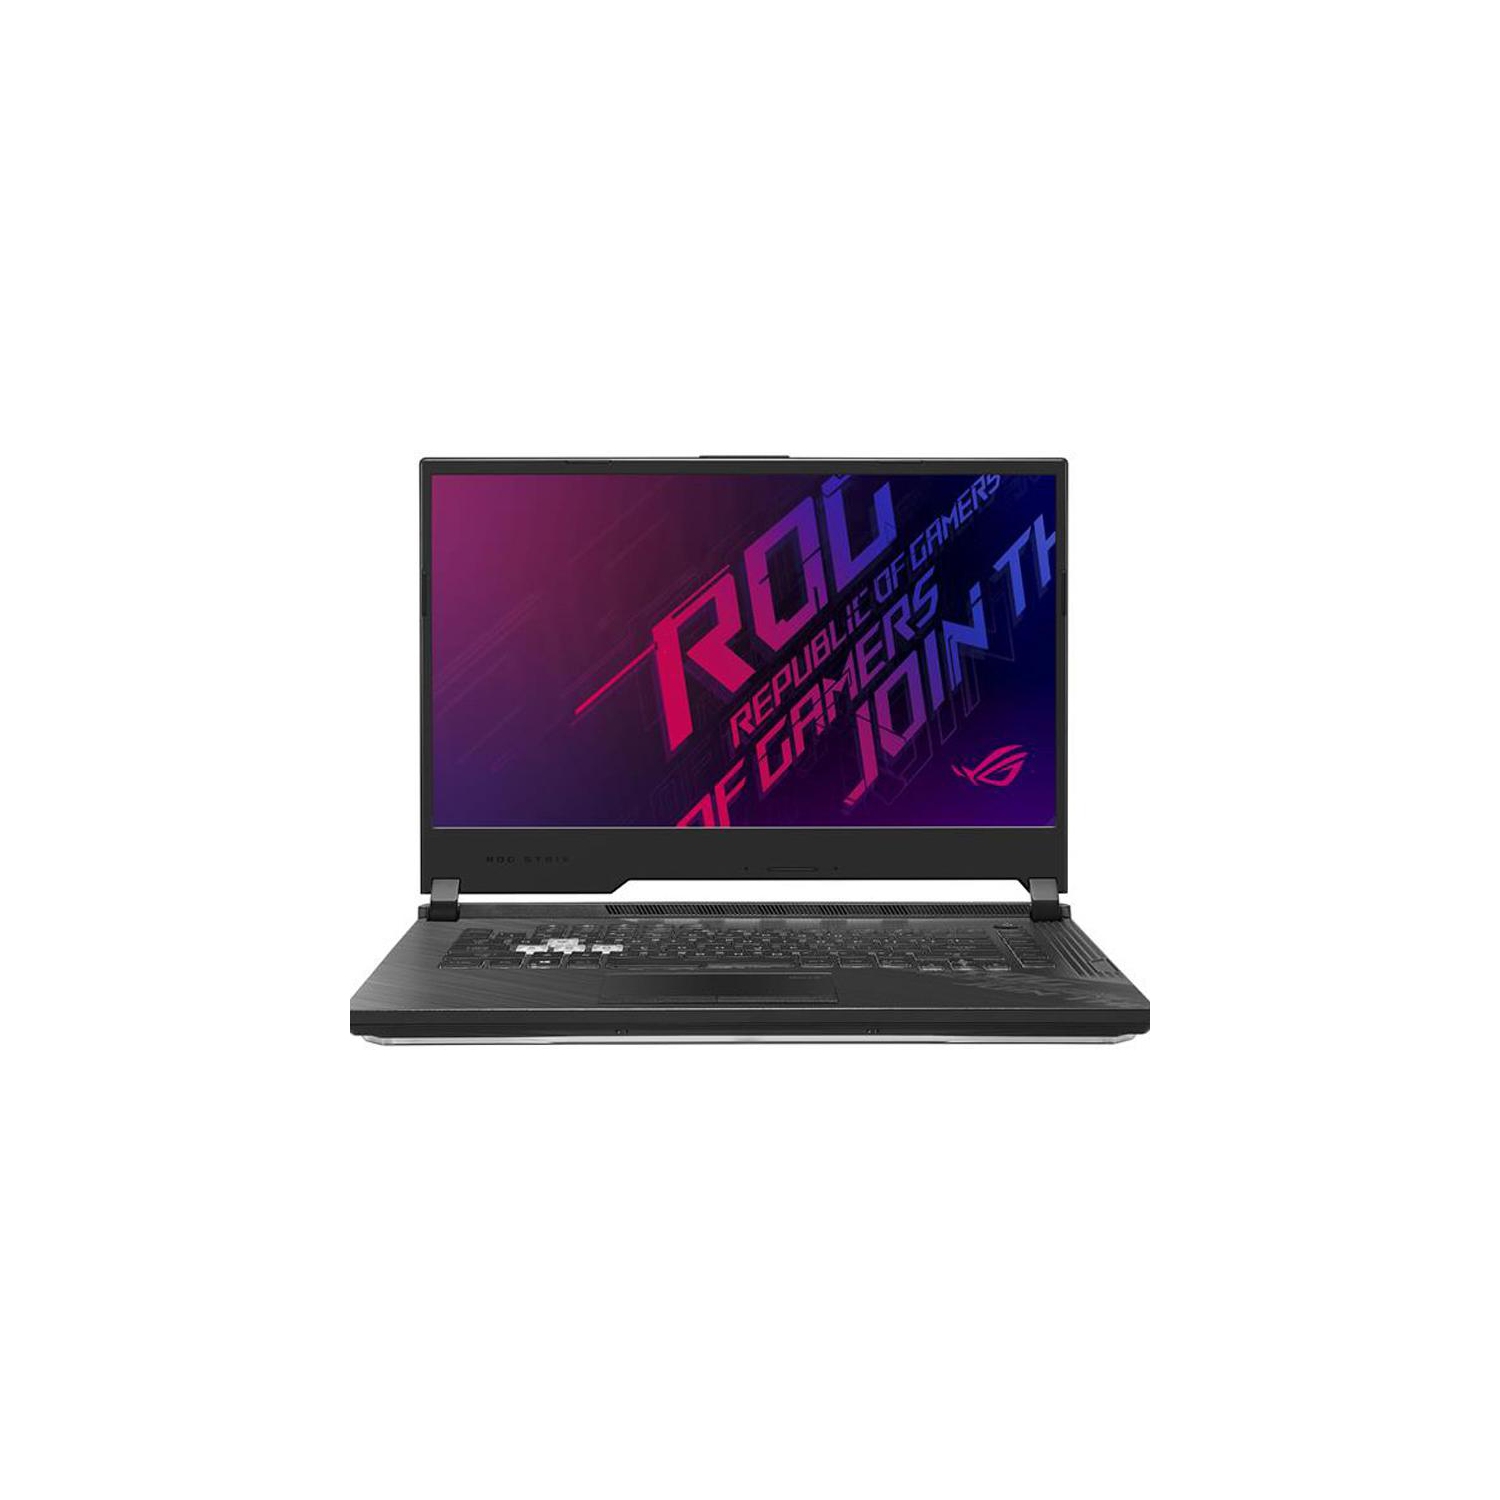 Asus 15.6" Business Laptop - Black (Intel Core i7-10750H/512 GB + 512 GB SSD/16 GB RAM/Windows 10) - (G512LU-Q72P-CB)